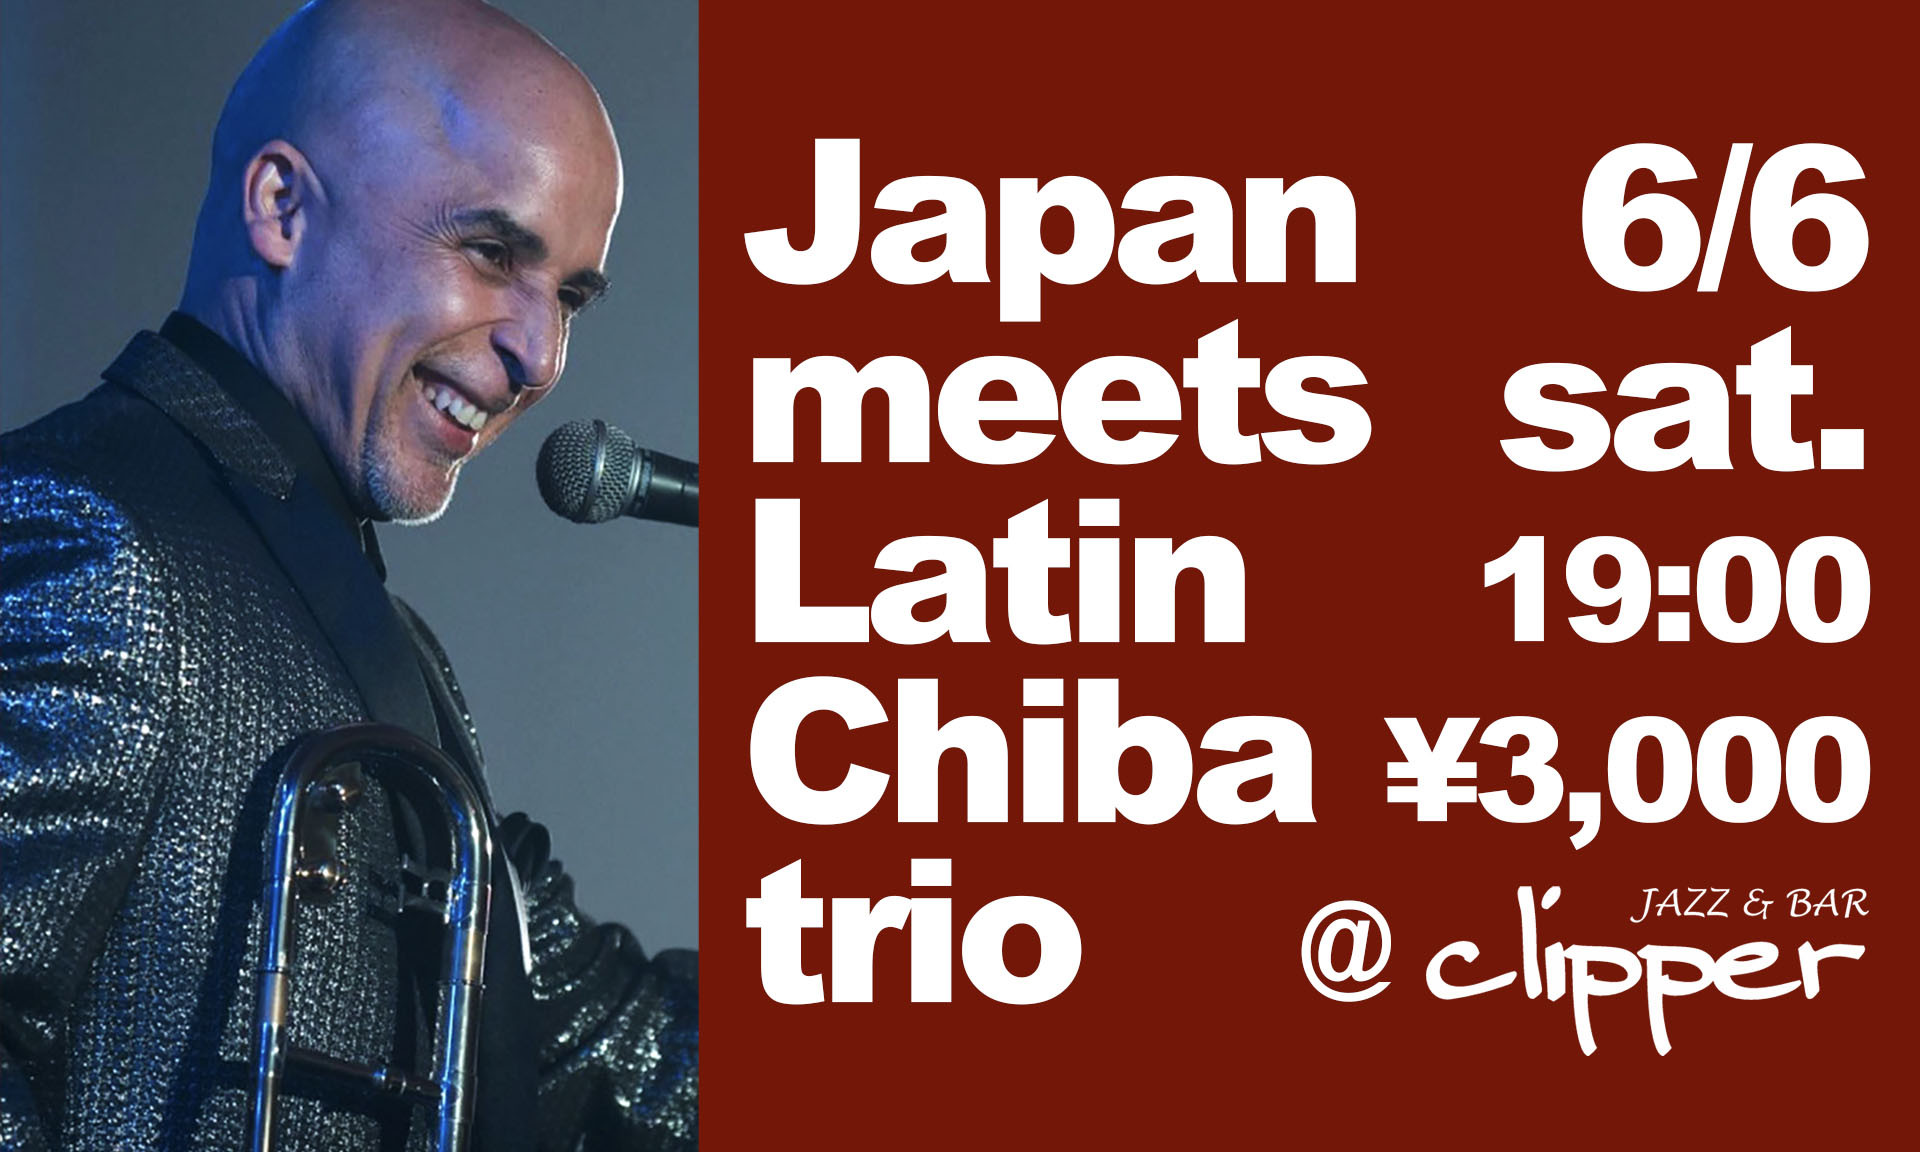 【緊急企画】Japan meets Latin Chiba trio【同時配信予定】